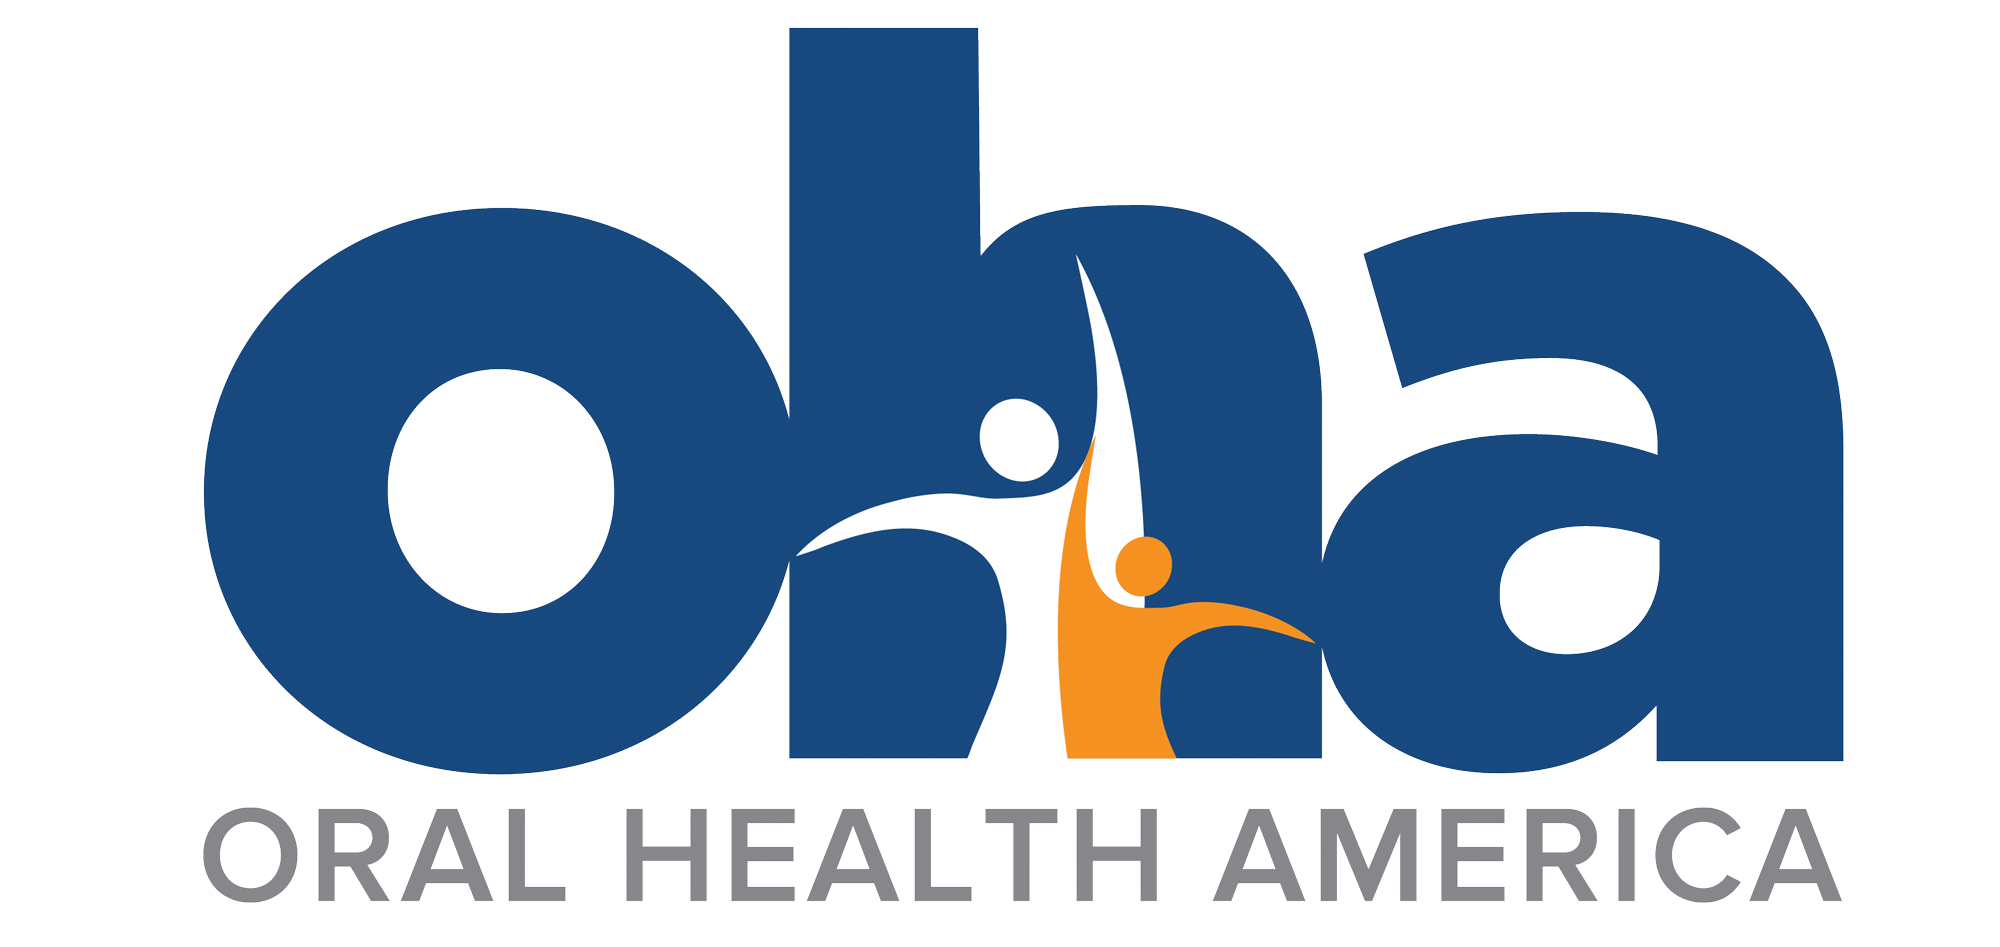 OHA Logo - Oral Health America Logo - Burkhart Dental Supply